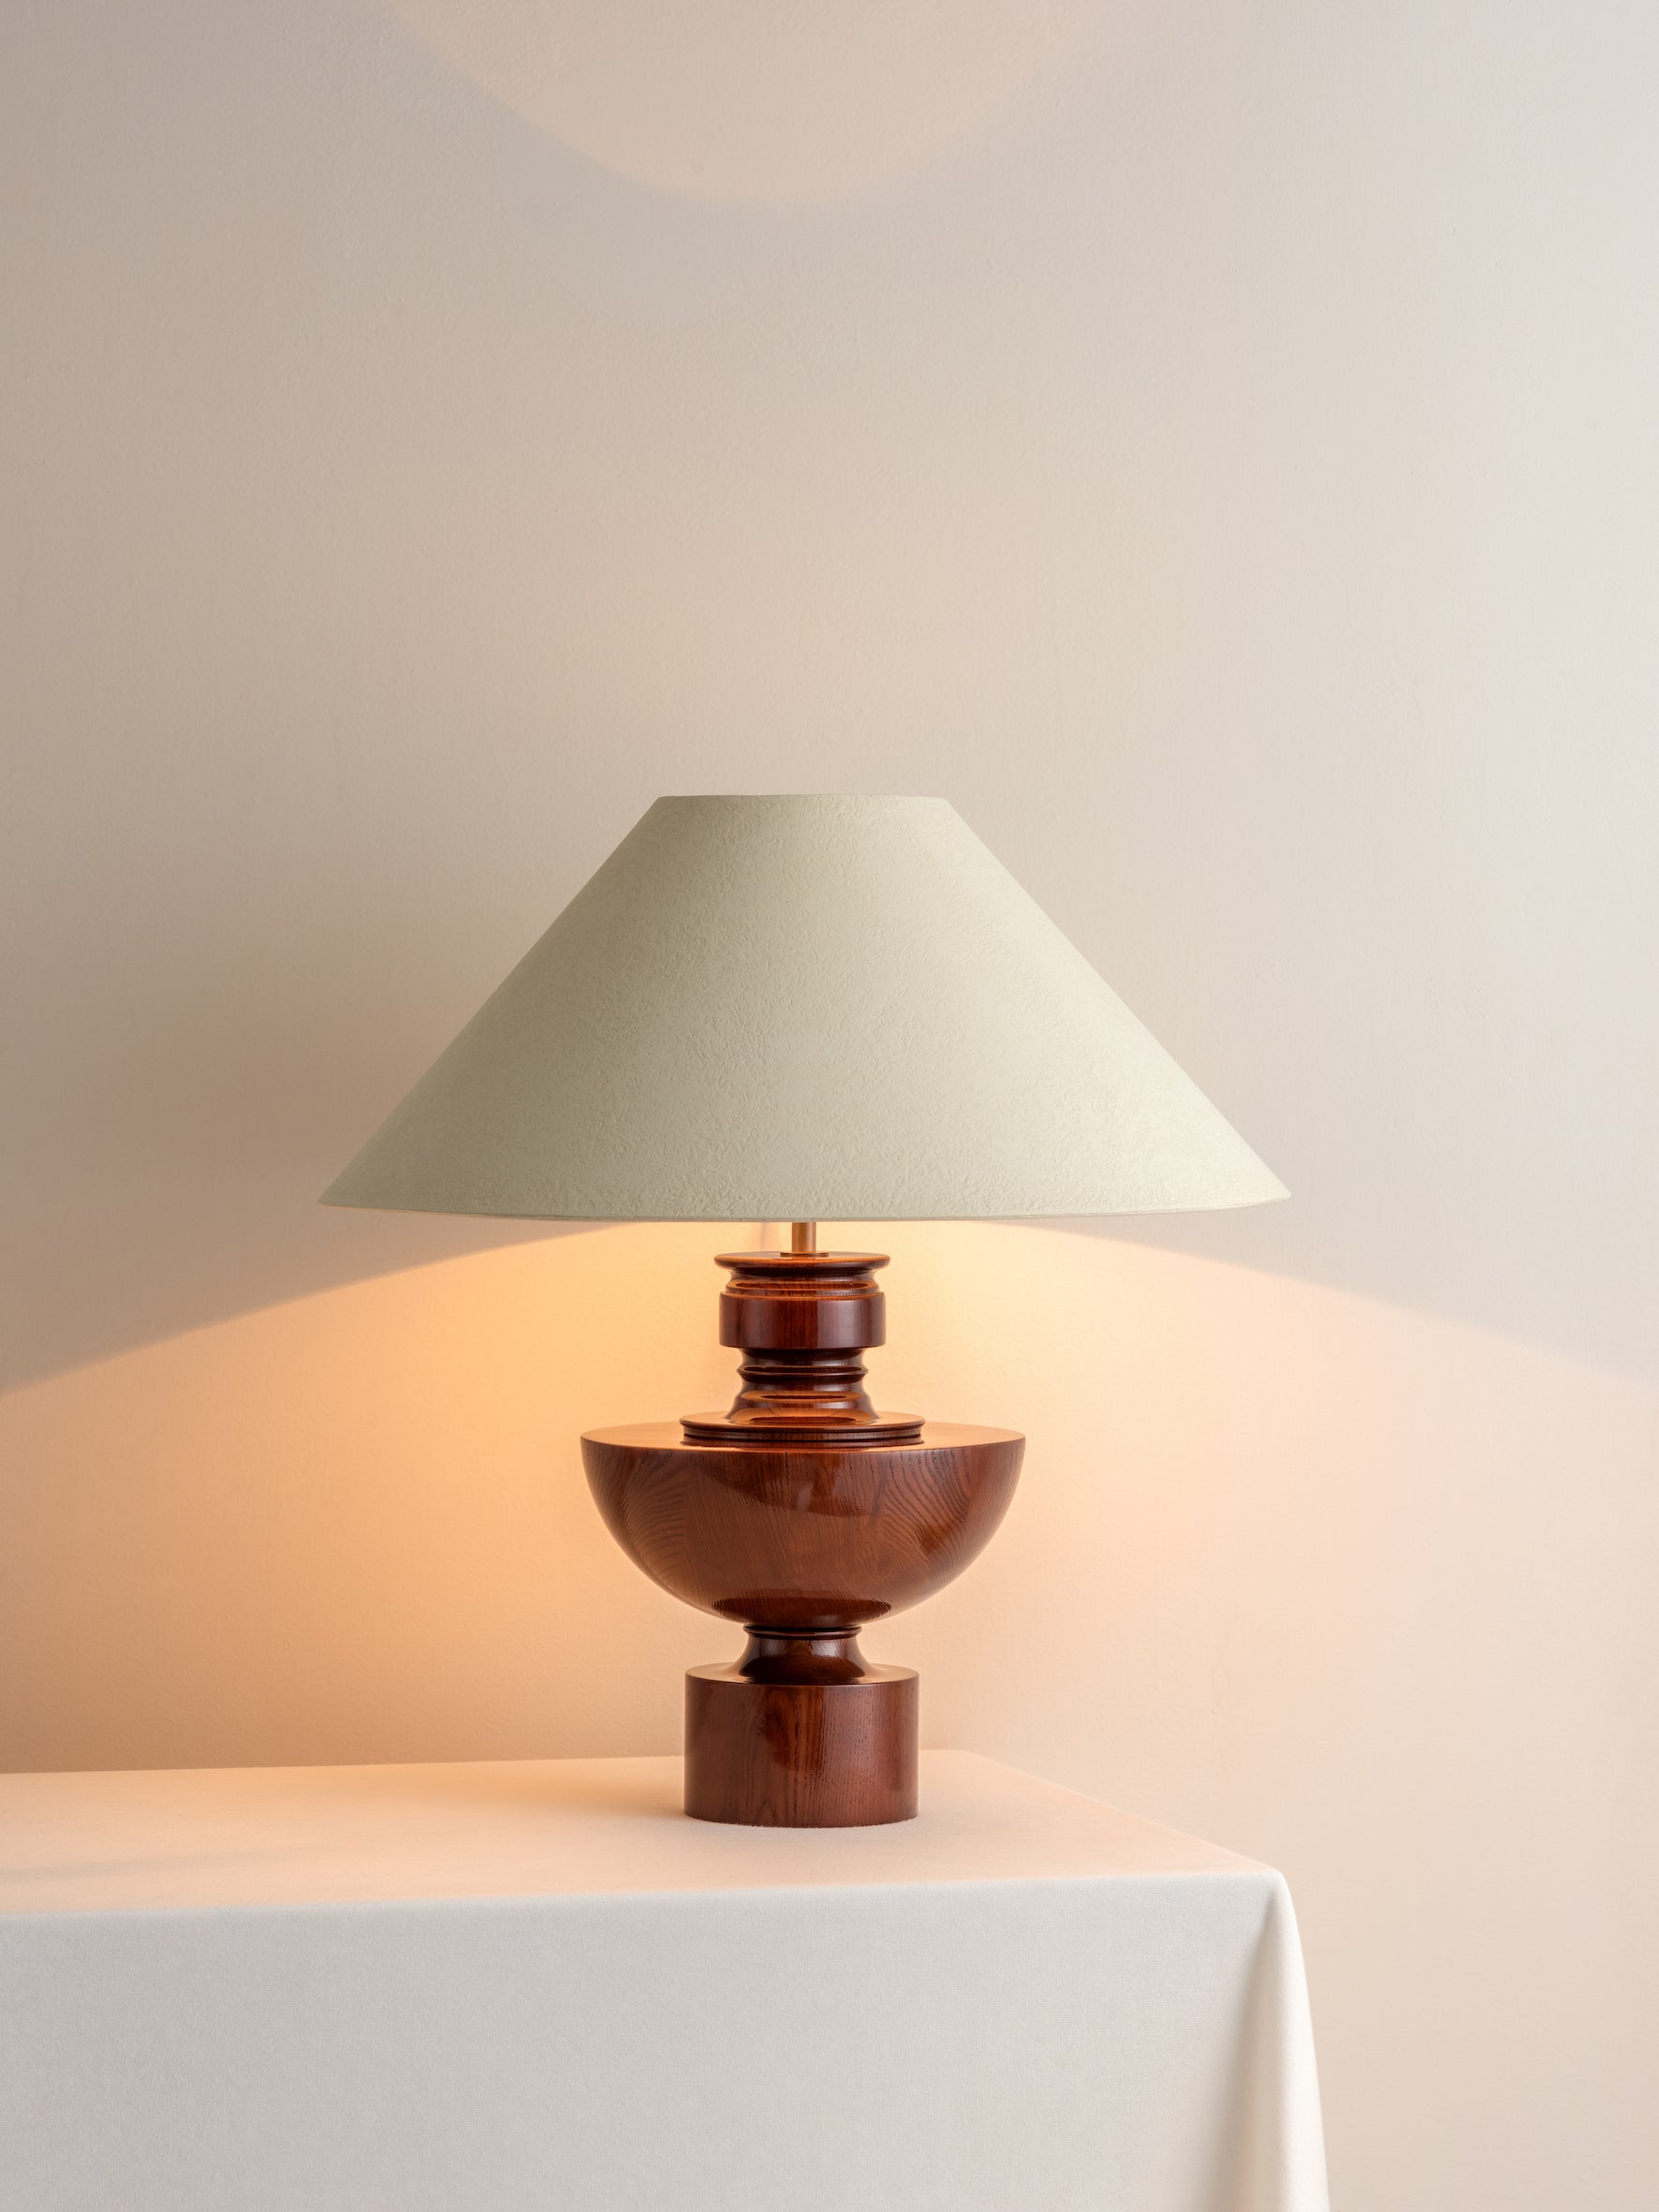 Editions spun wood lamp with + plaster shade | Table Lamp | Lights & Lamps Inc | Modern Affordable Designer Lighting | USA